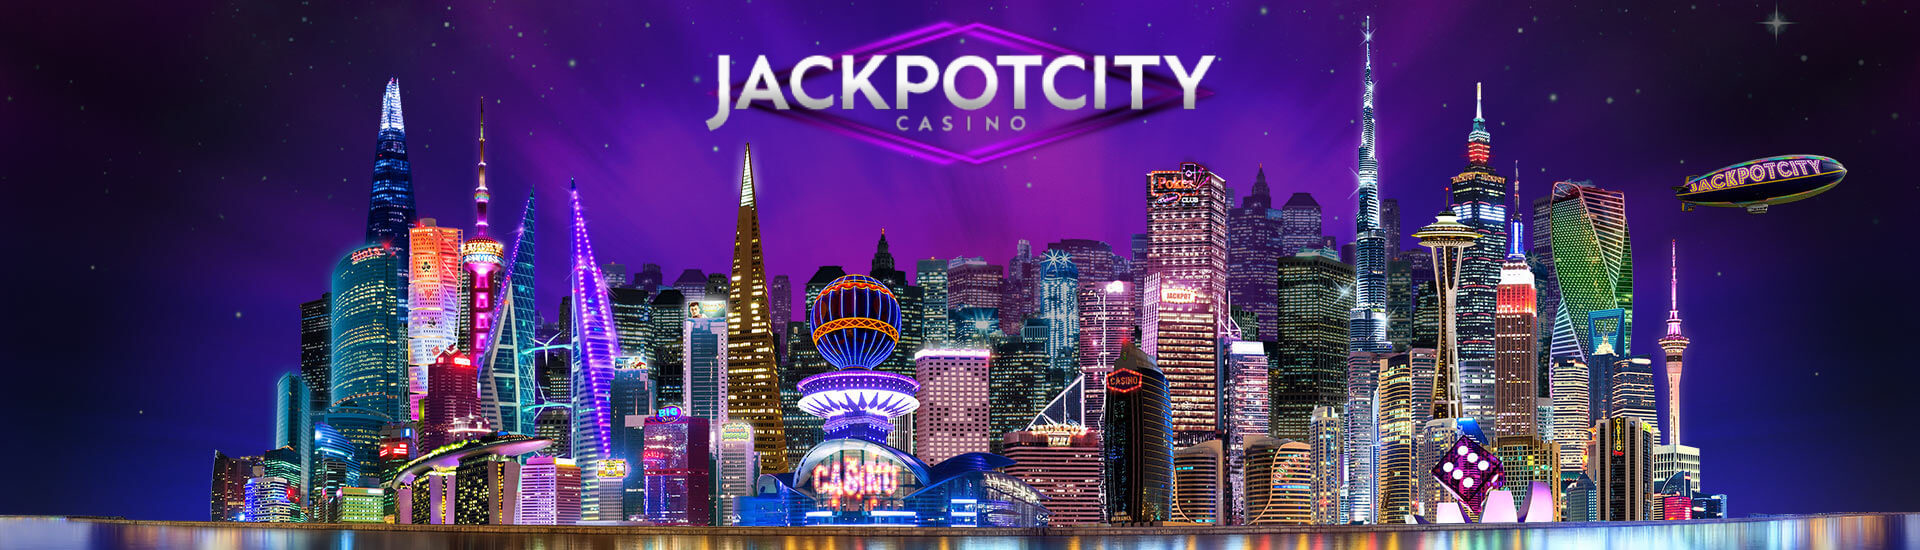 Jackpot City Casino Header.